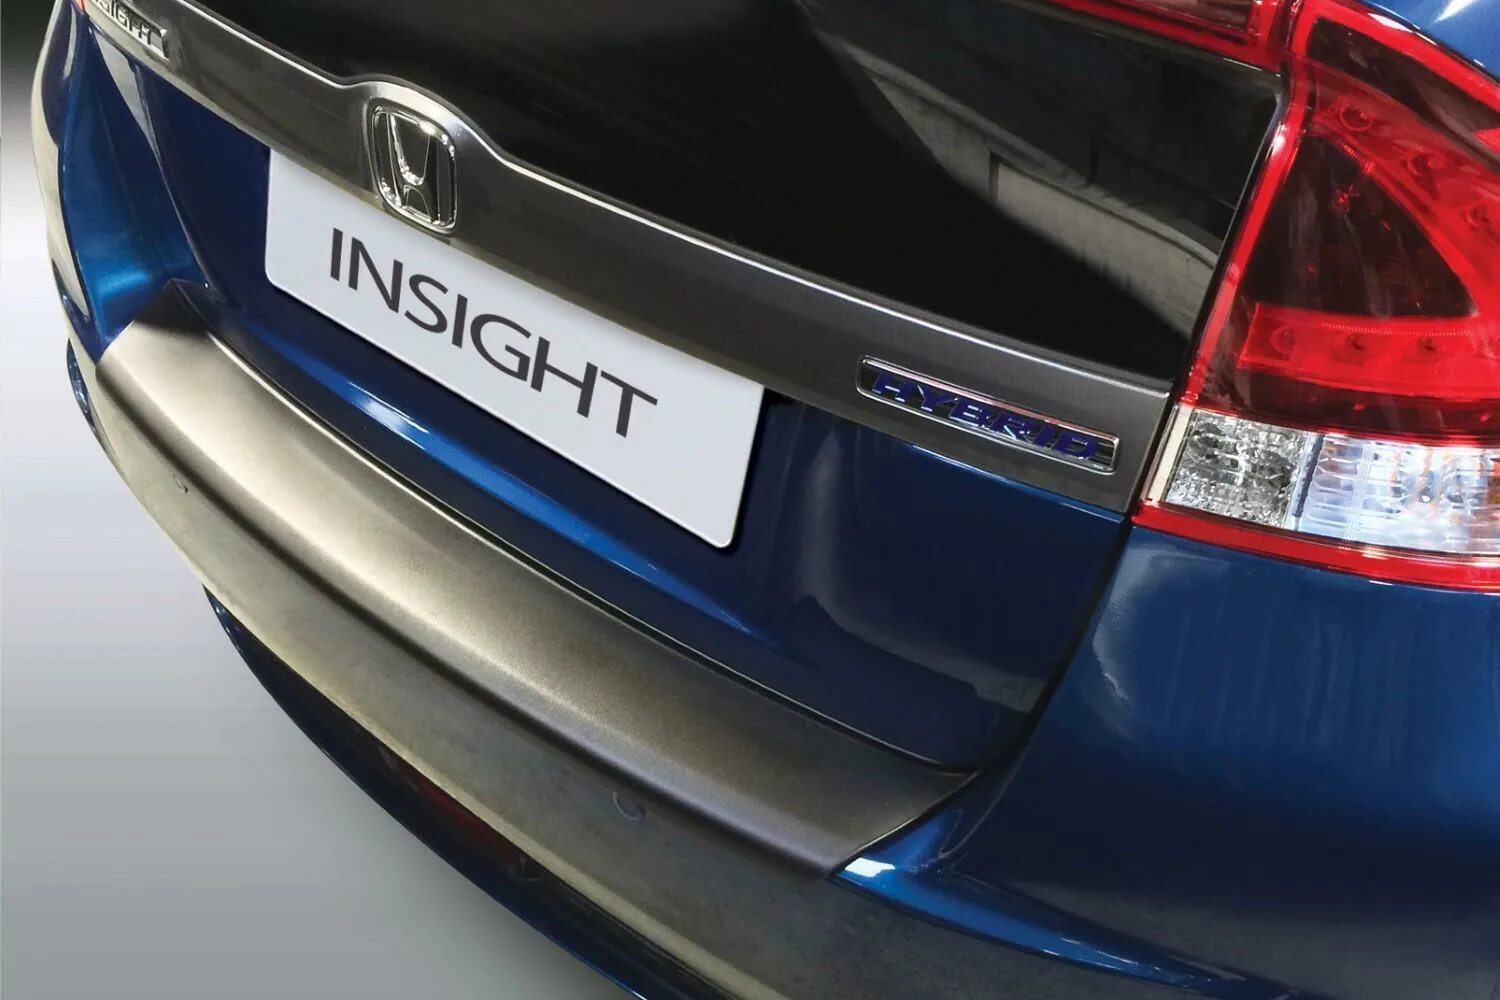 Бампер инсайт. Накладка заднего бампера Honda Insight. Бампер Хонда Инсайт. Honda Insight накладка на бампер. Накладка спойлер Хонда Инсайт.